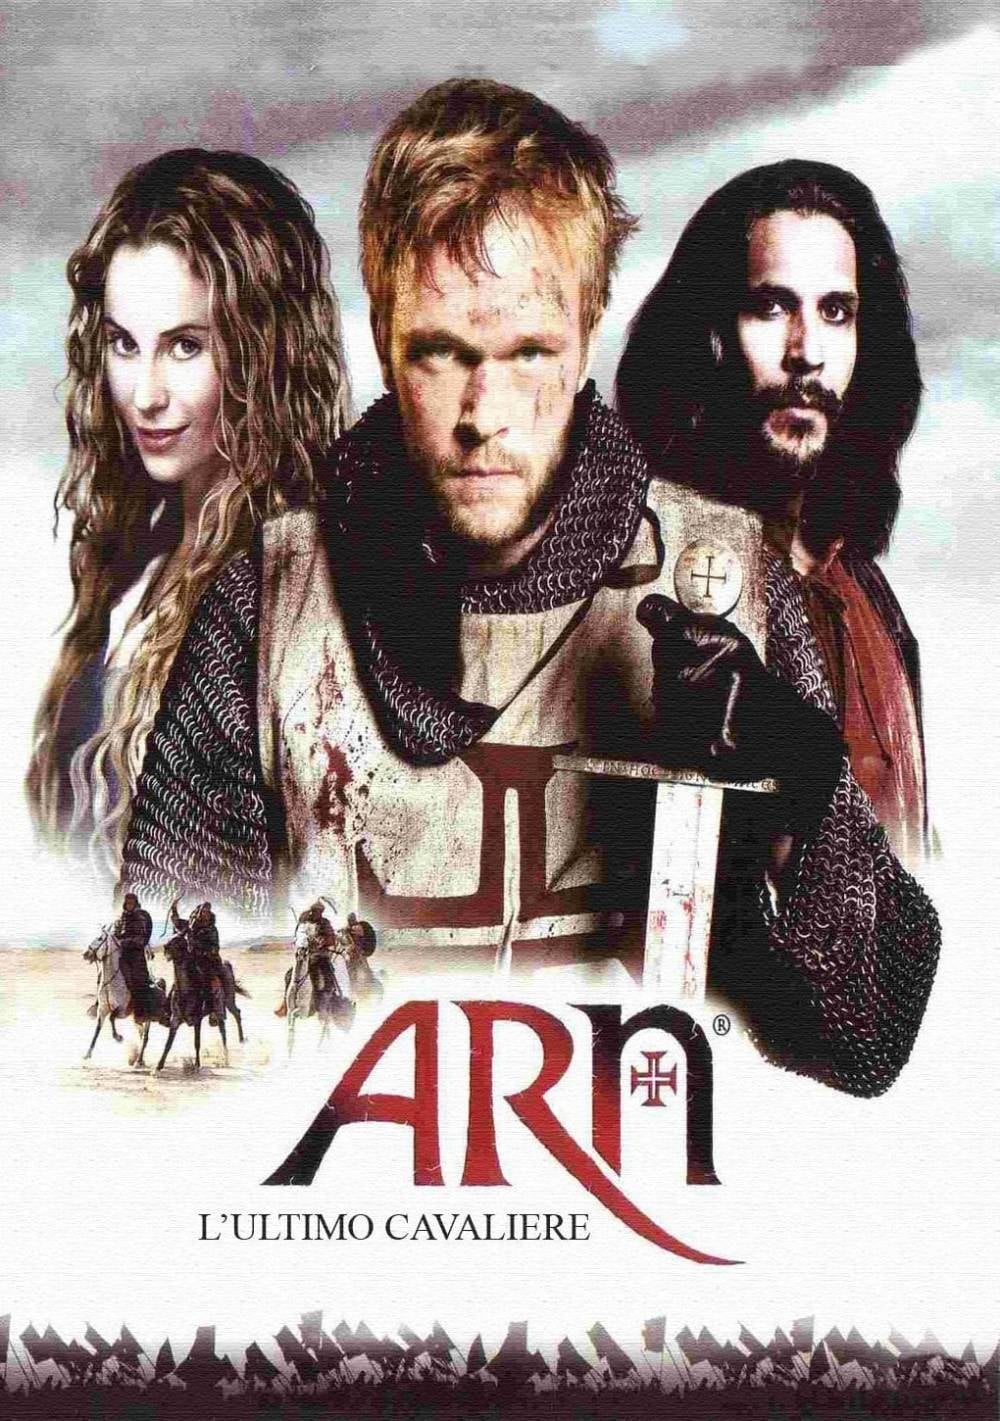 Arn - L'ultimo cavaliere film